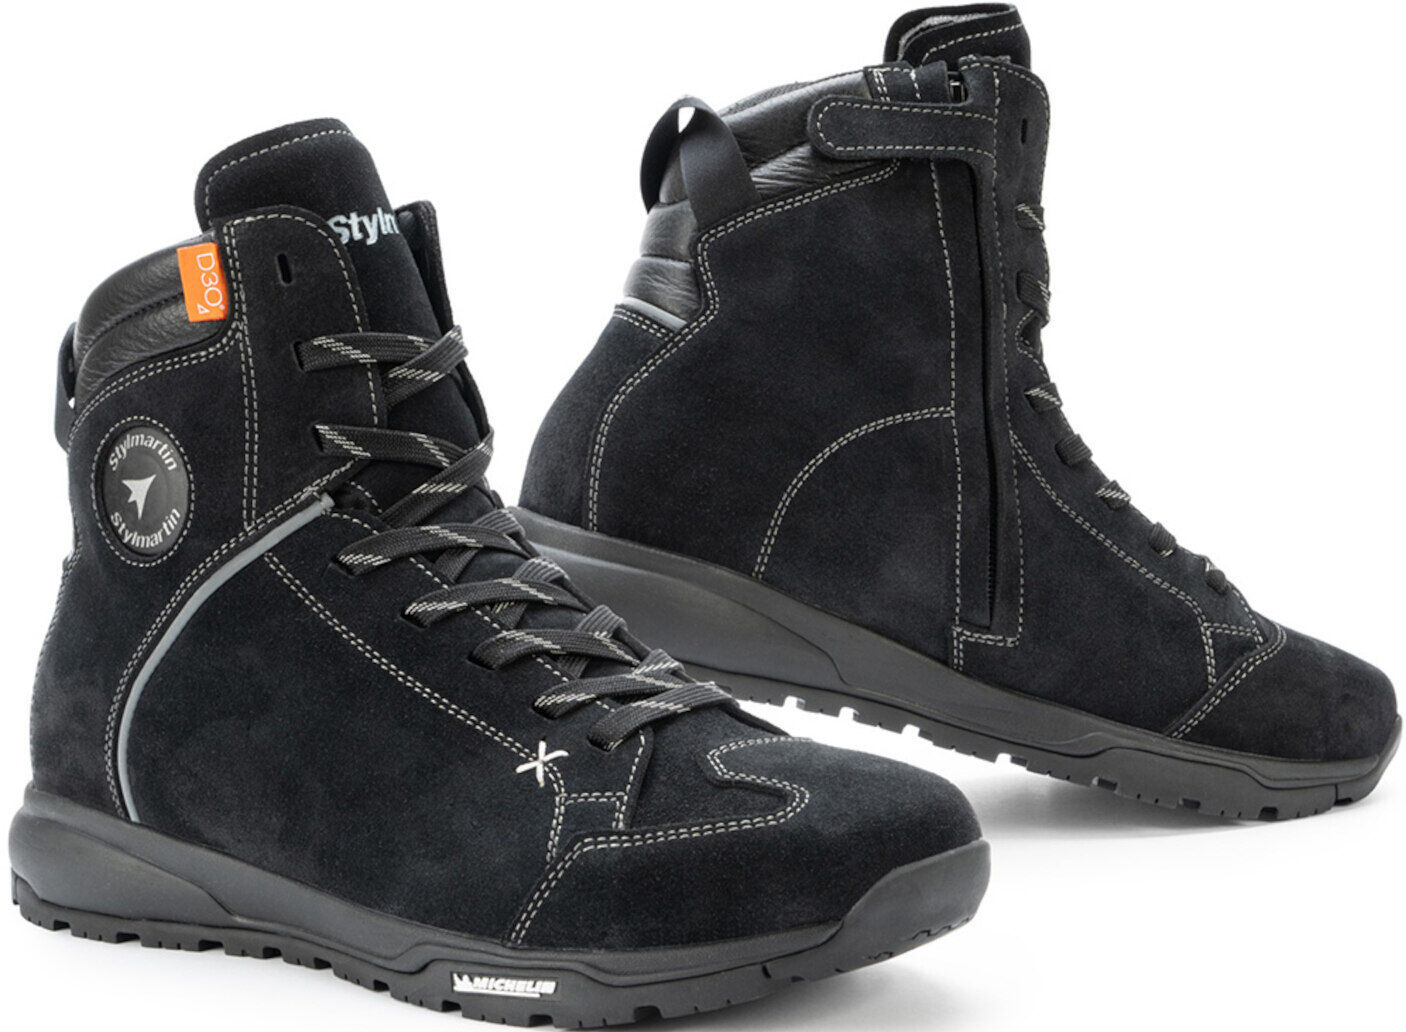 Stylmartin Zed Zapatos de moto impermeables - Negro (42)